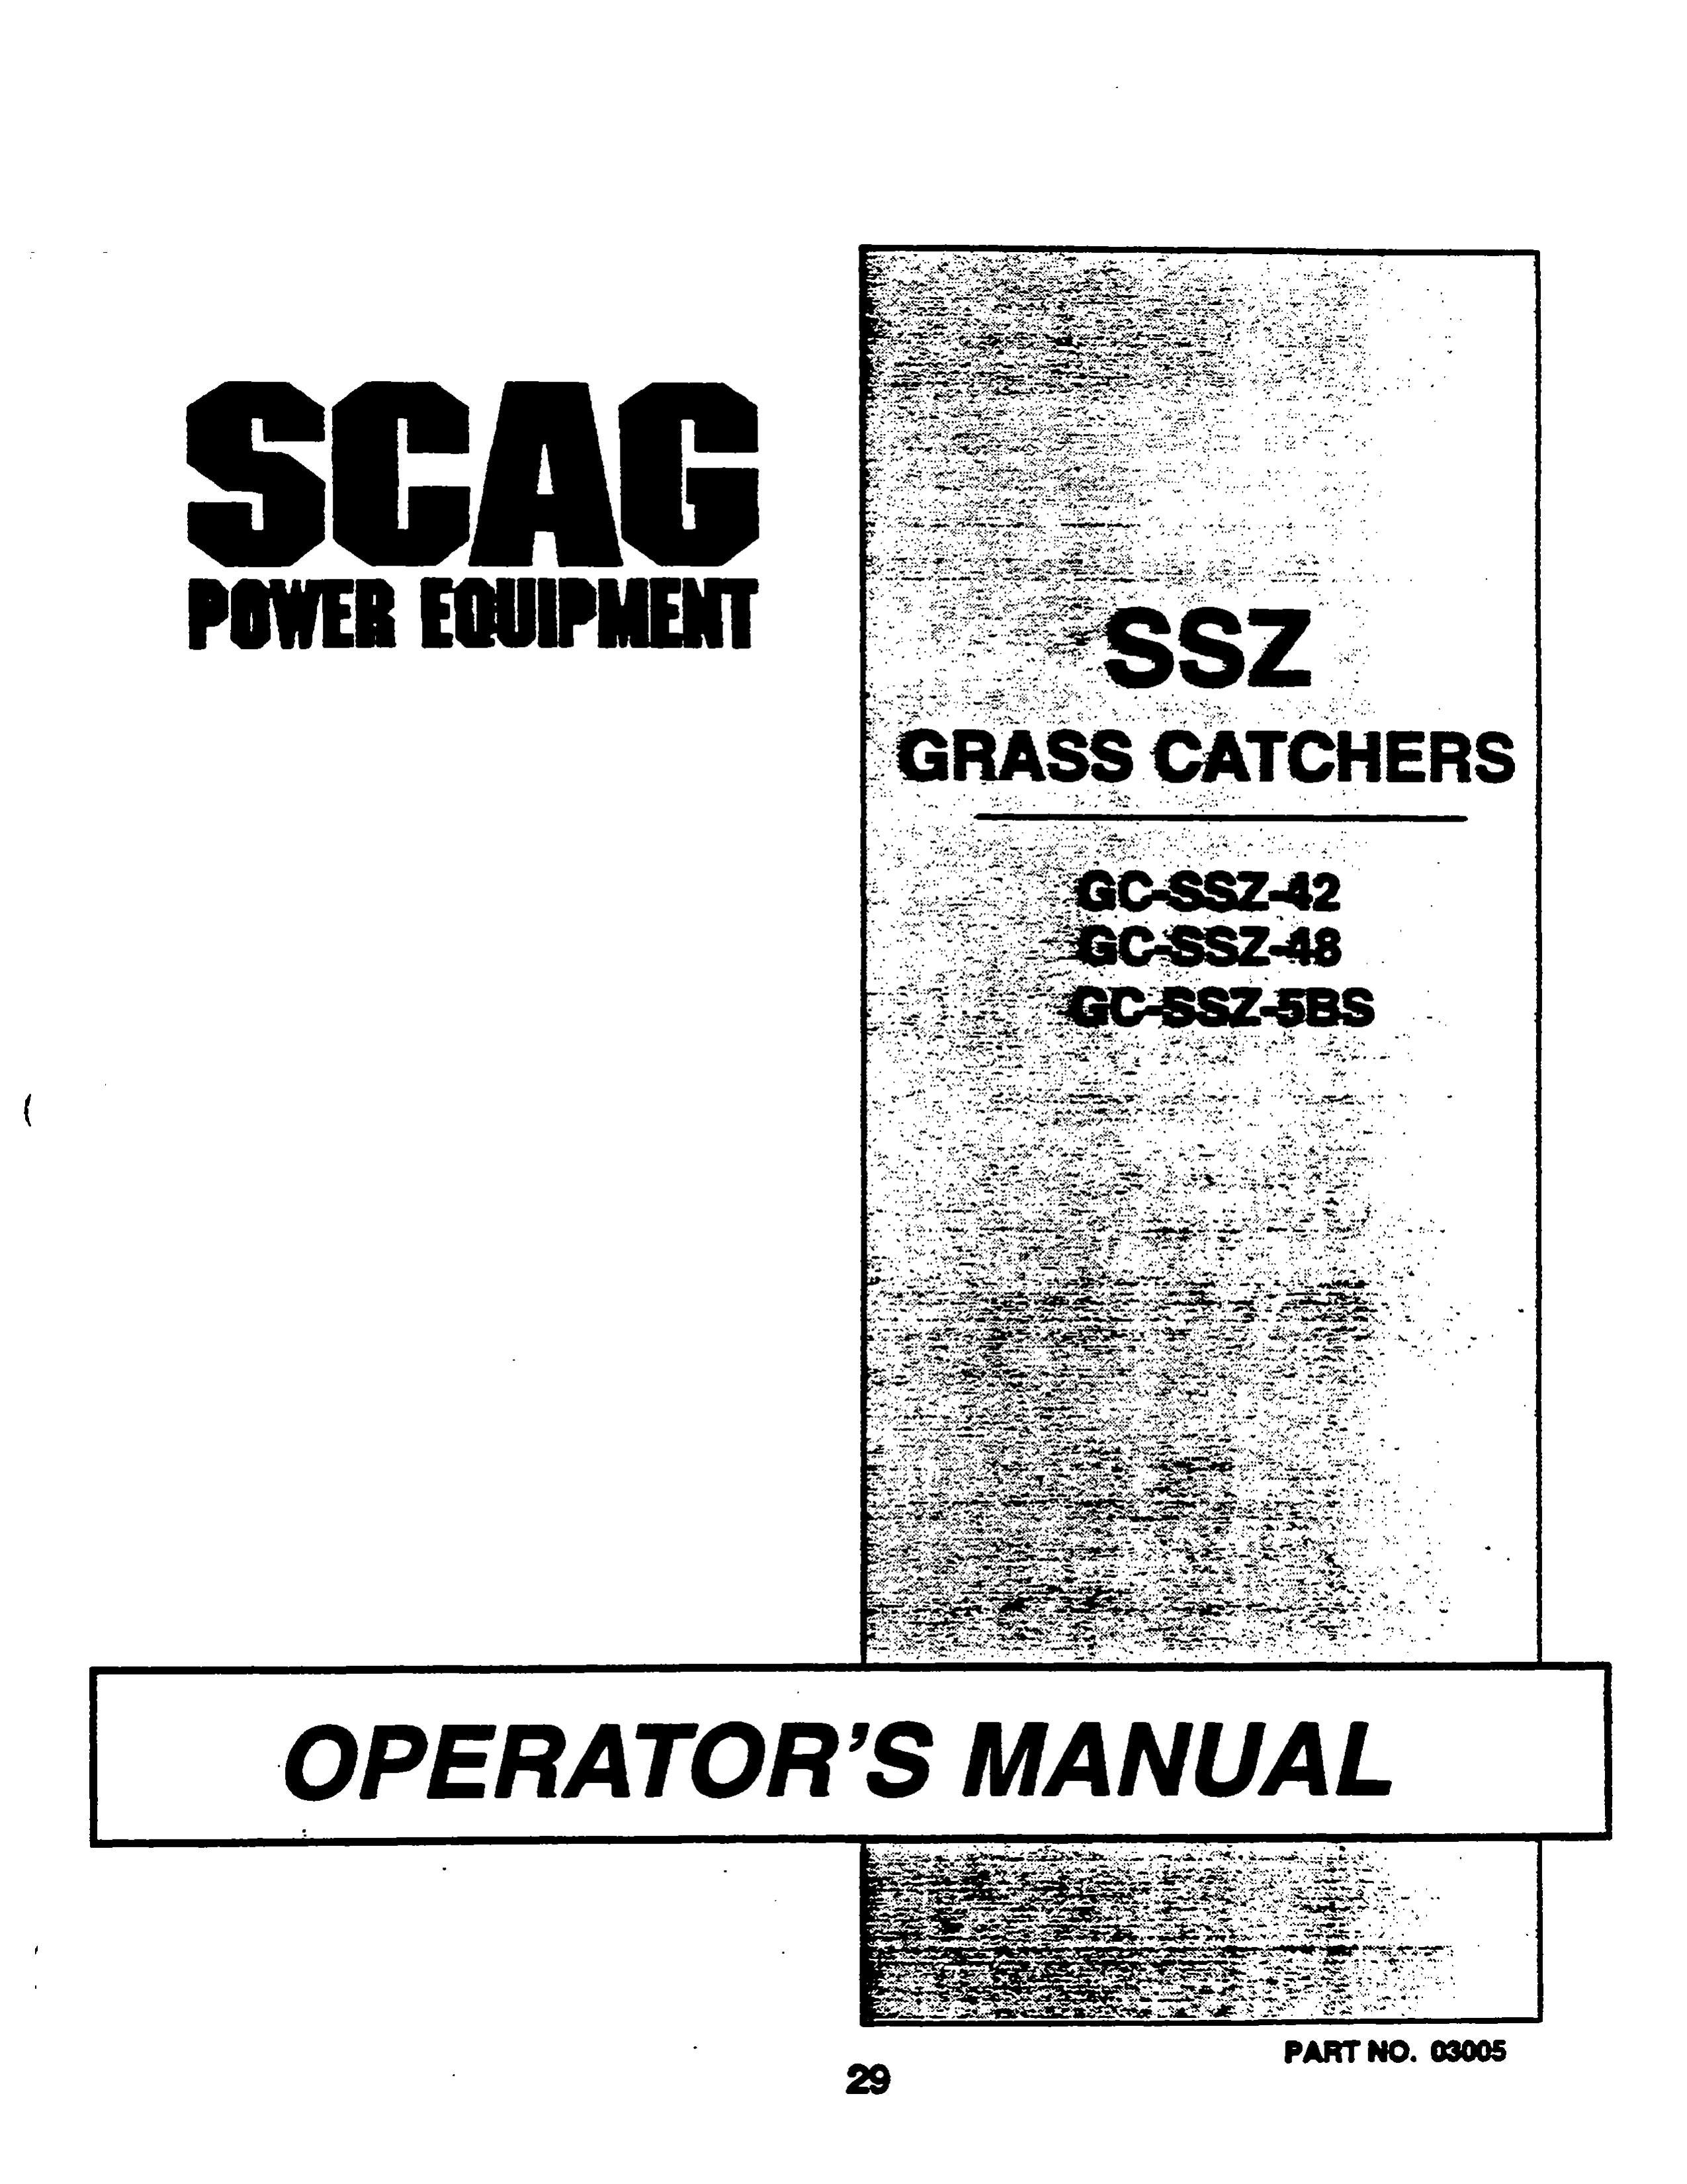 Scag Power Equipment GC-SSZ-42 Trimmer User Manual